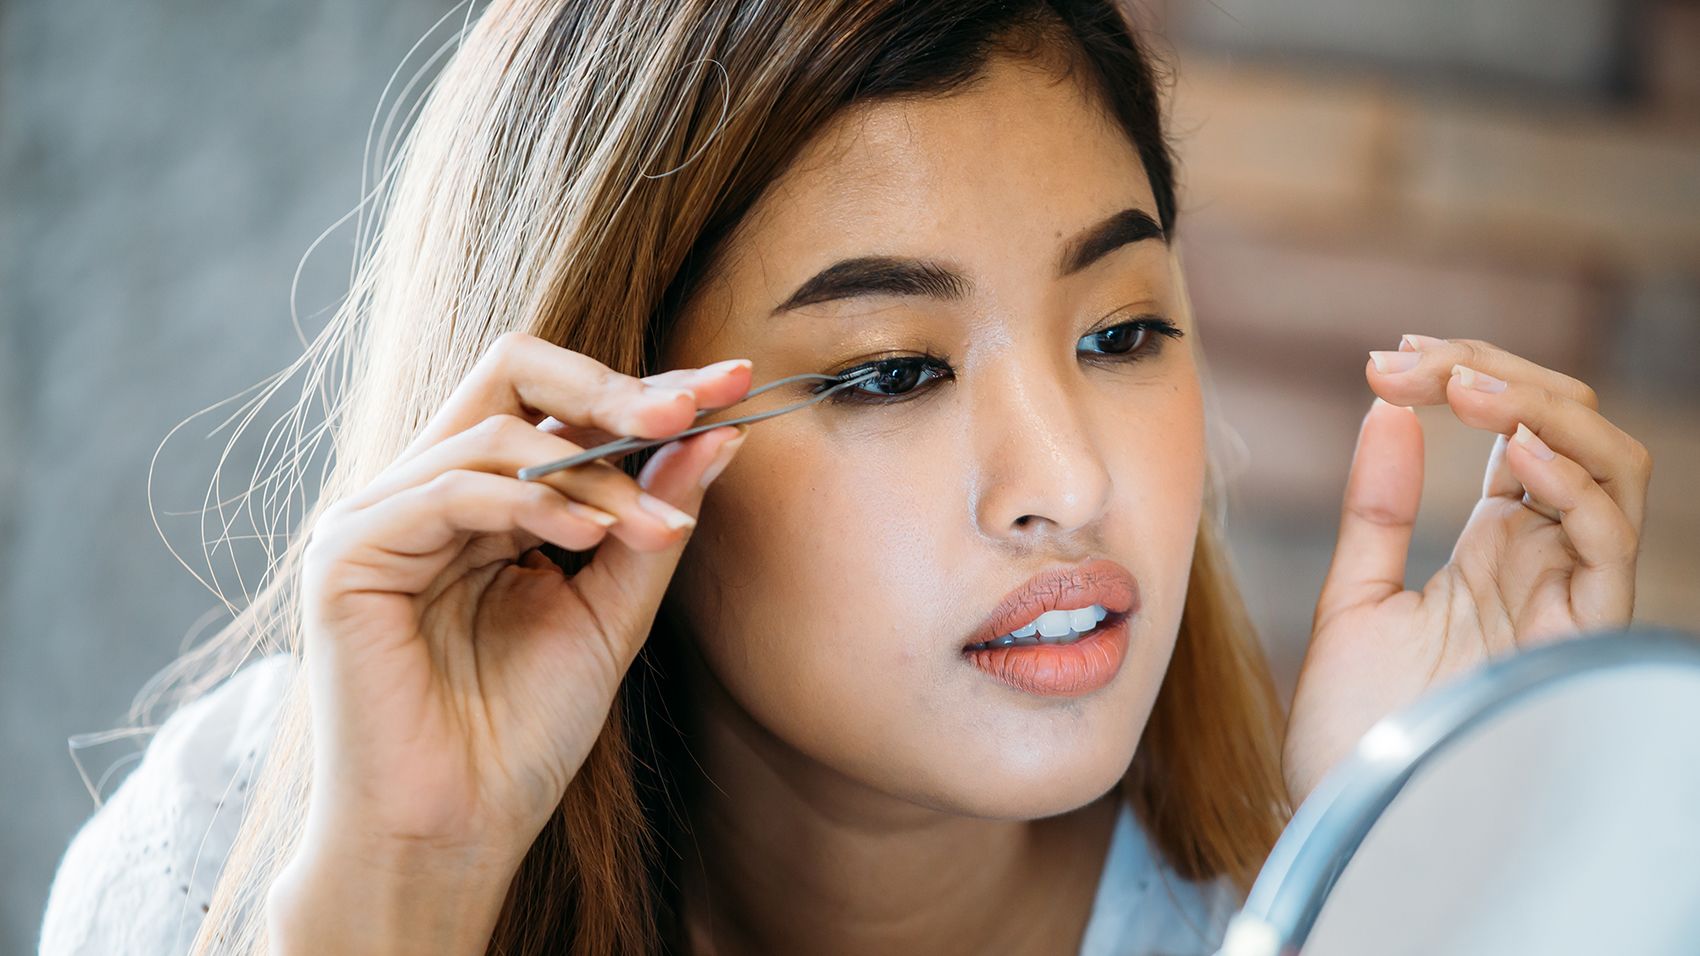 How to apply false eyelashes, according to beauty experts | CNN Underscored